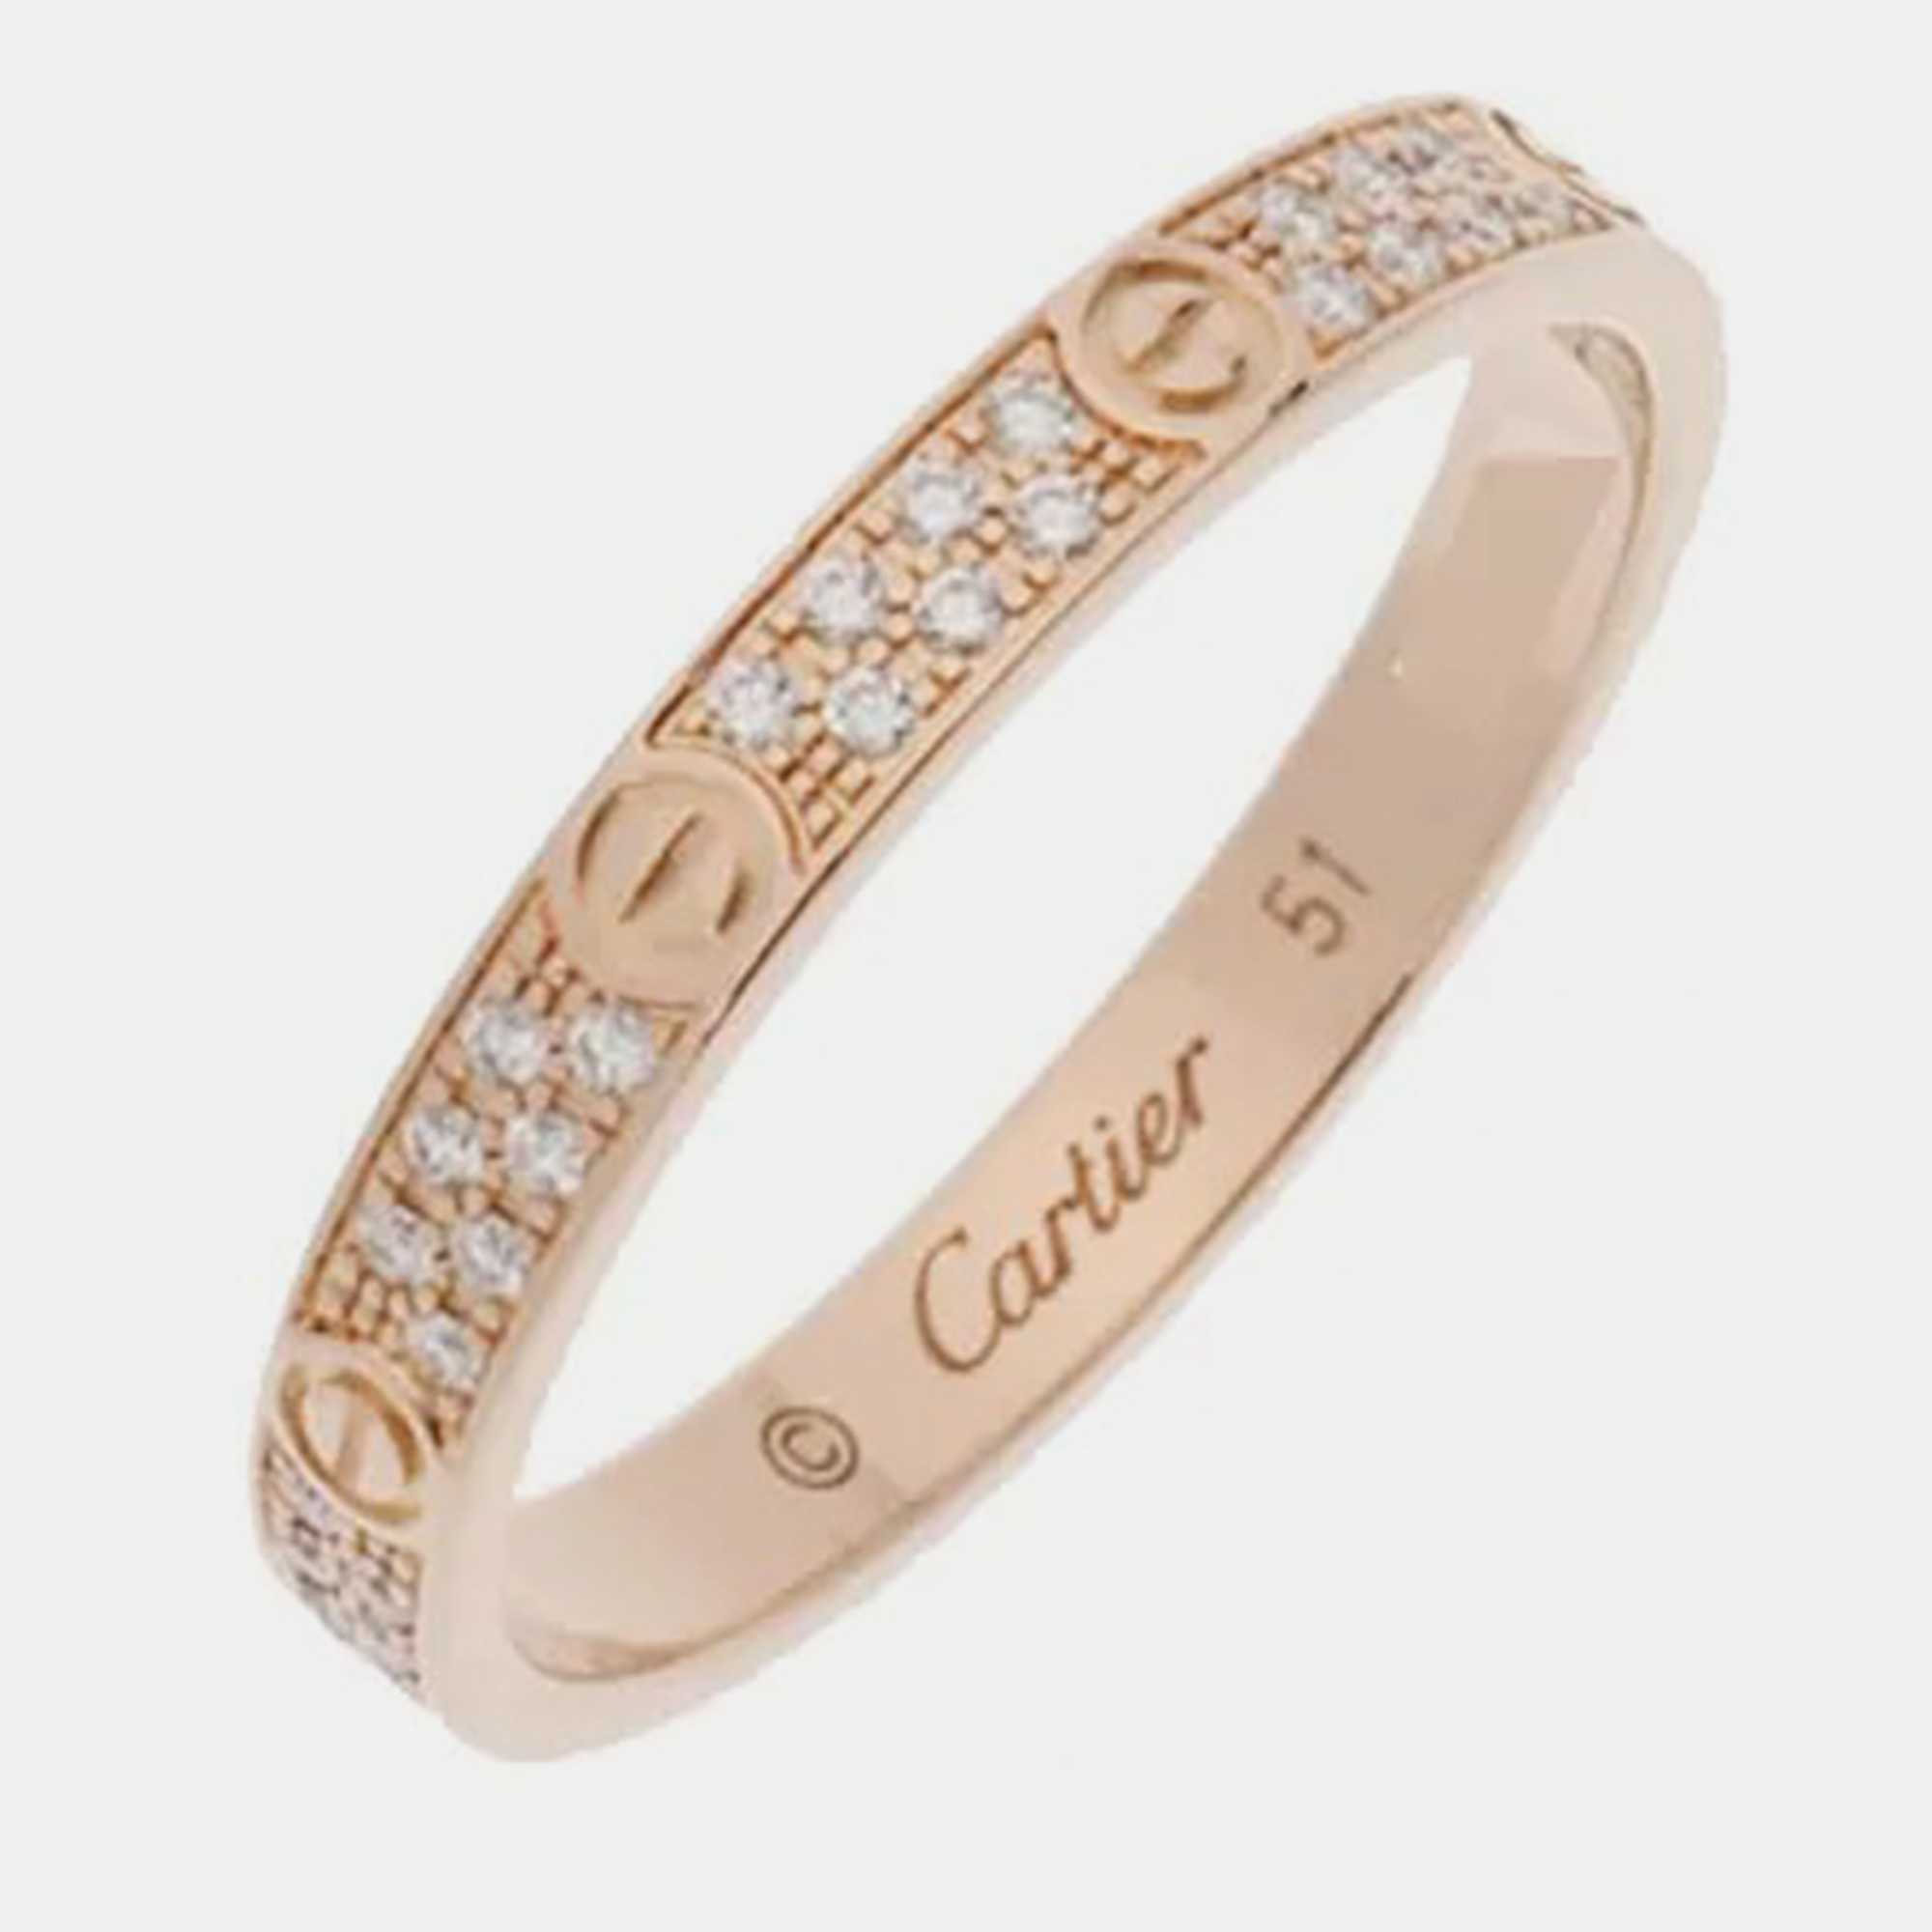 Cartier 18k rose gold diamond love mini ring size 51